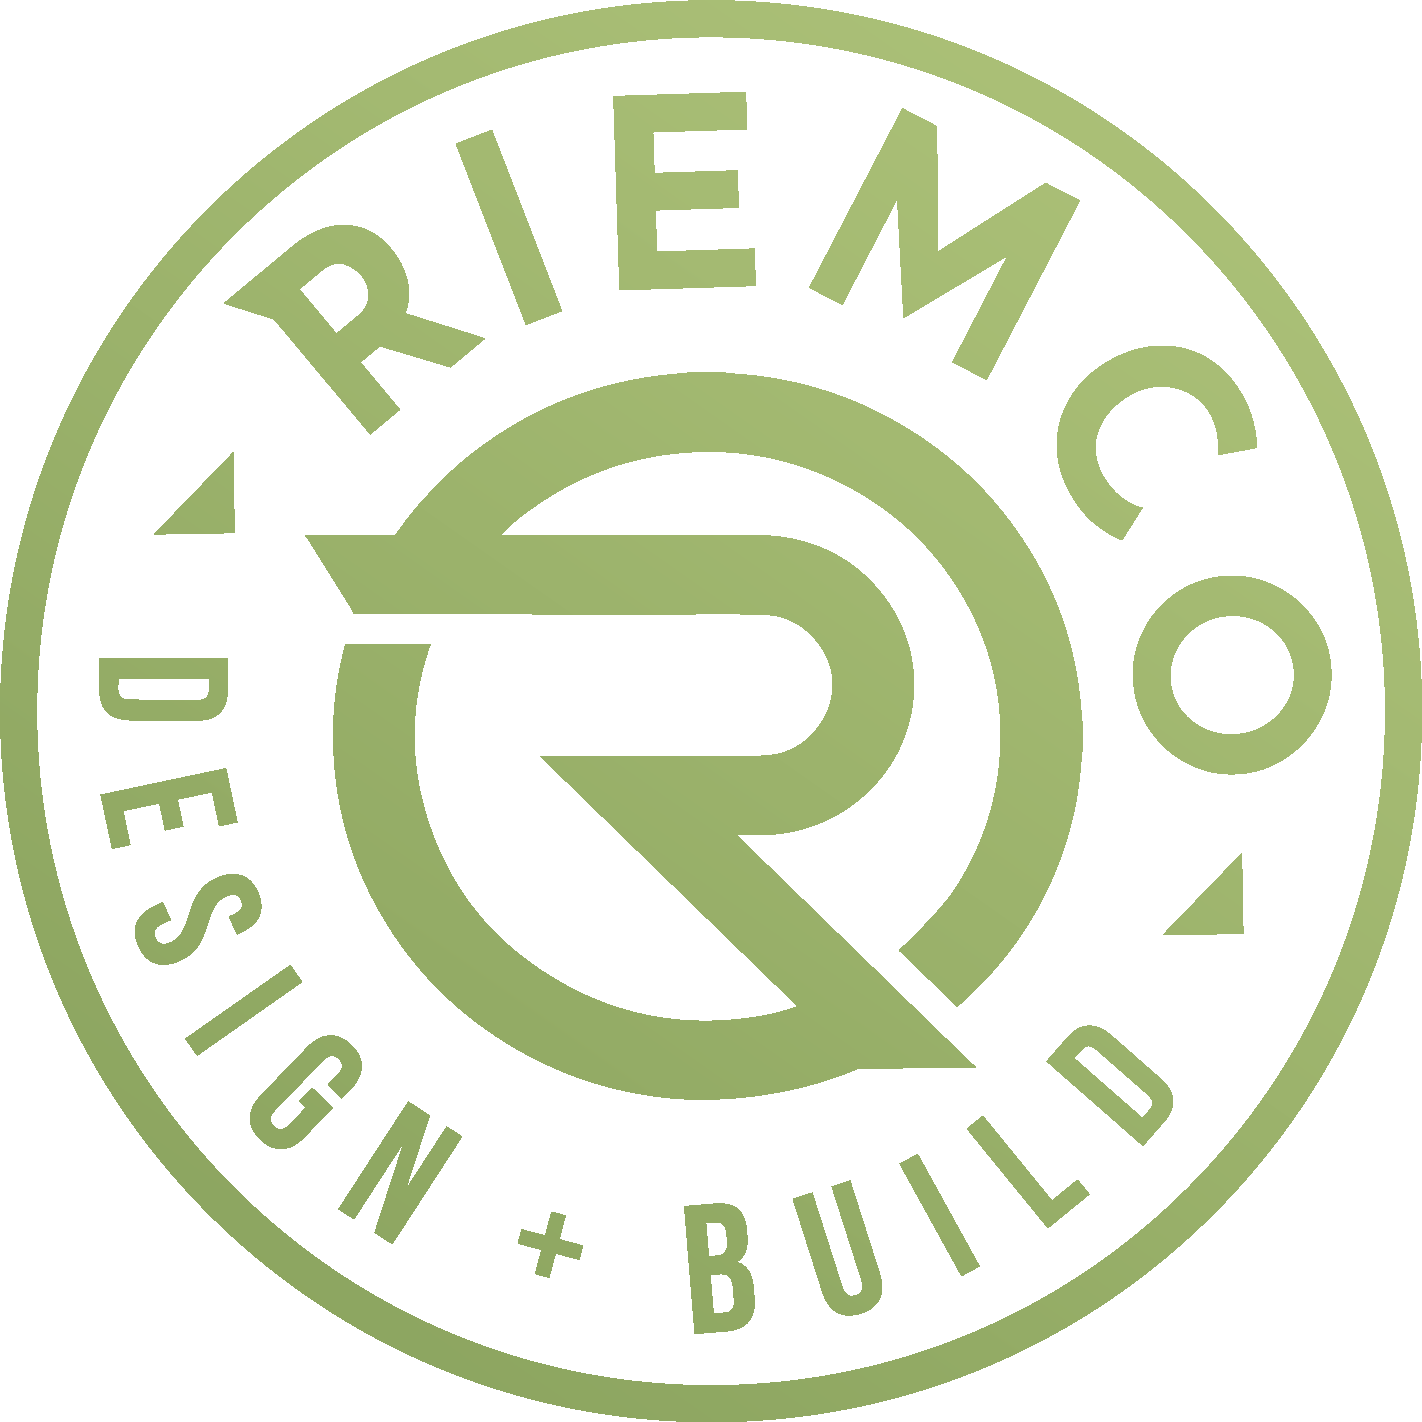 Riemco Design + Build company logo